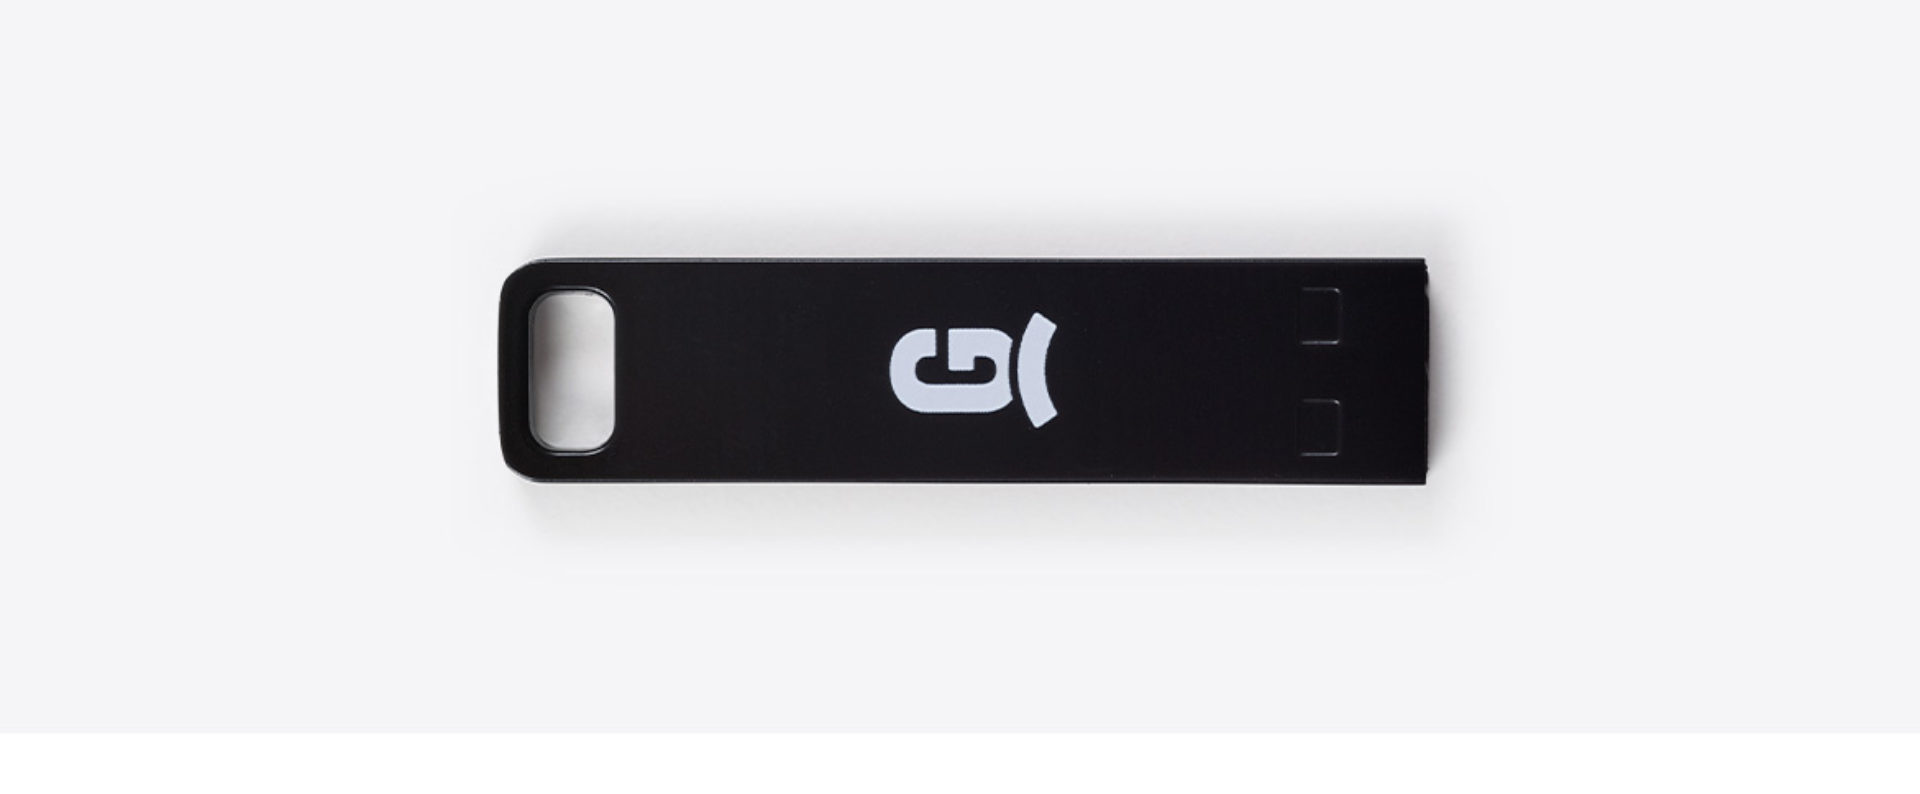 Referenz Gurtenfestival USB Stick